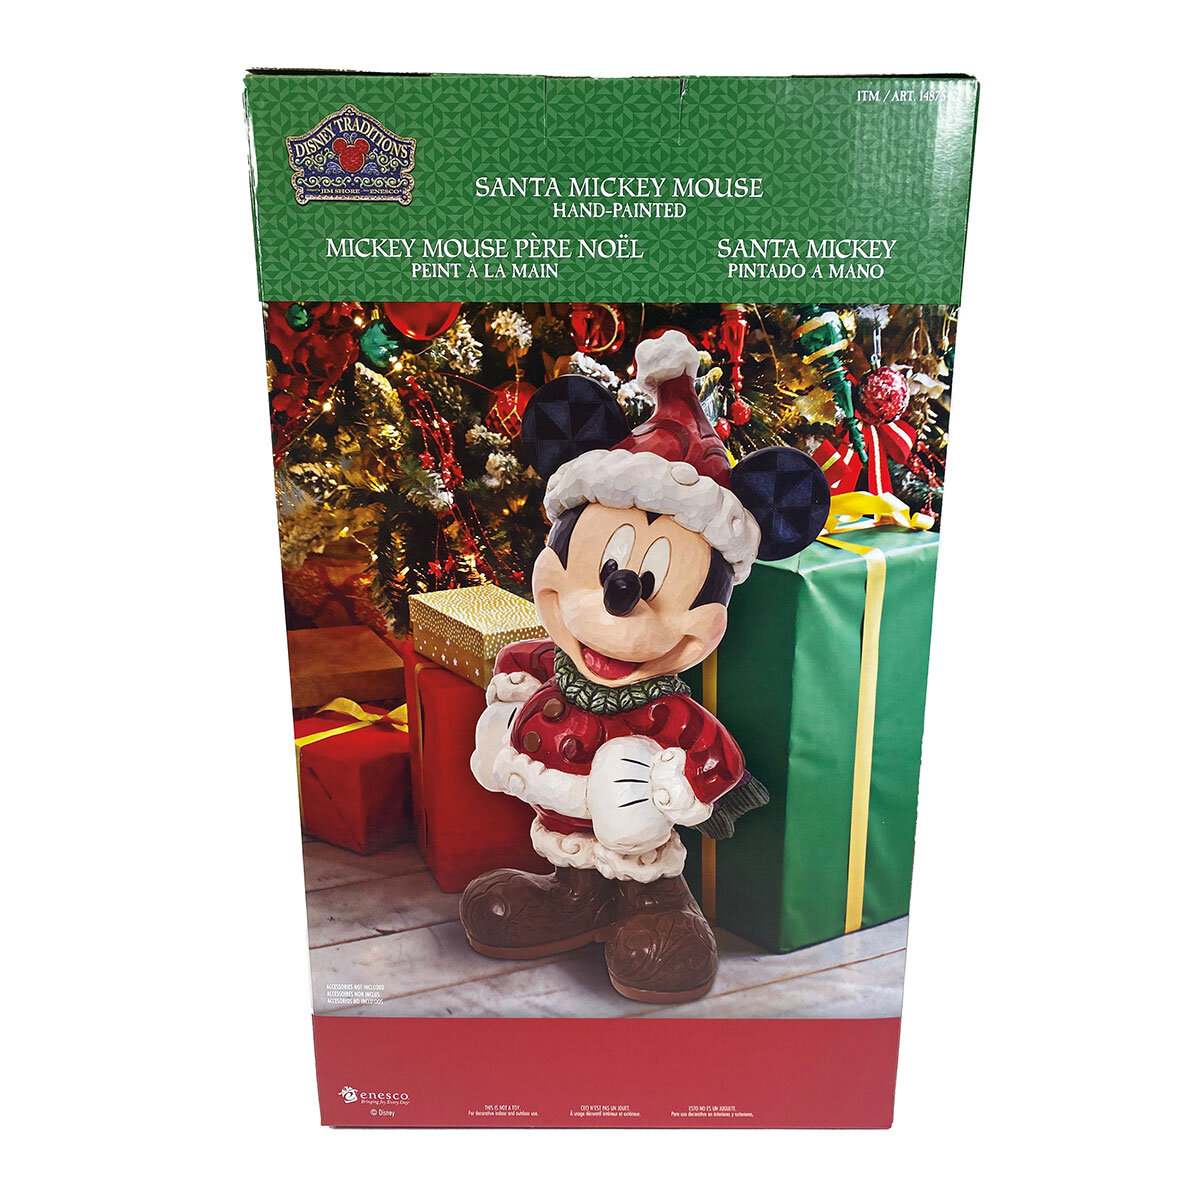 Buy Santa Mickey & Minnie Minnie Lifestyle Image at Costco.co.uk